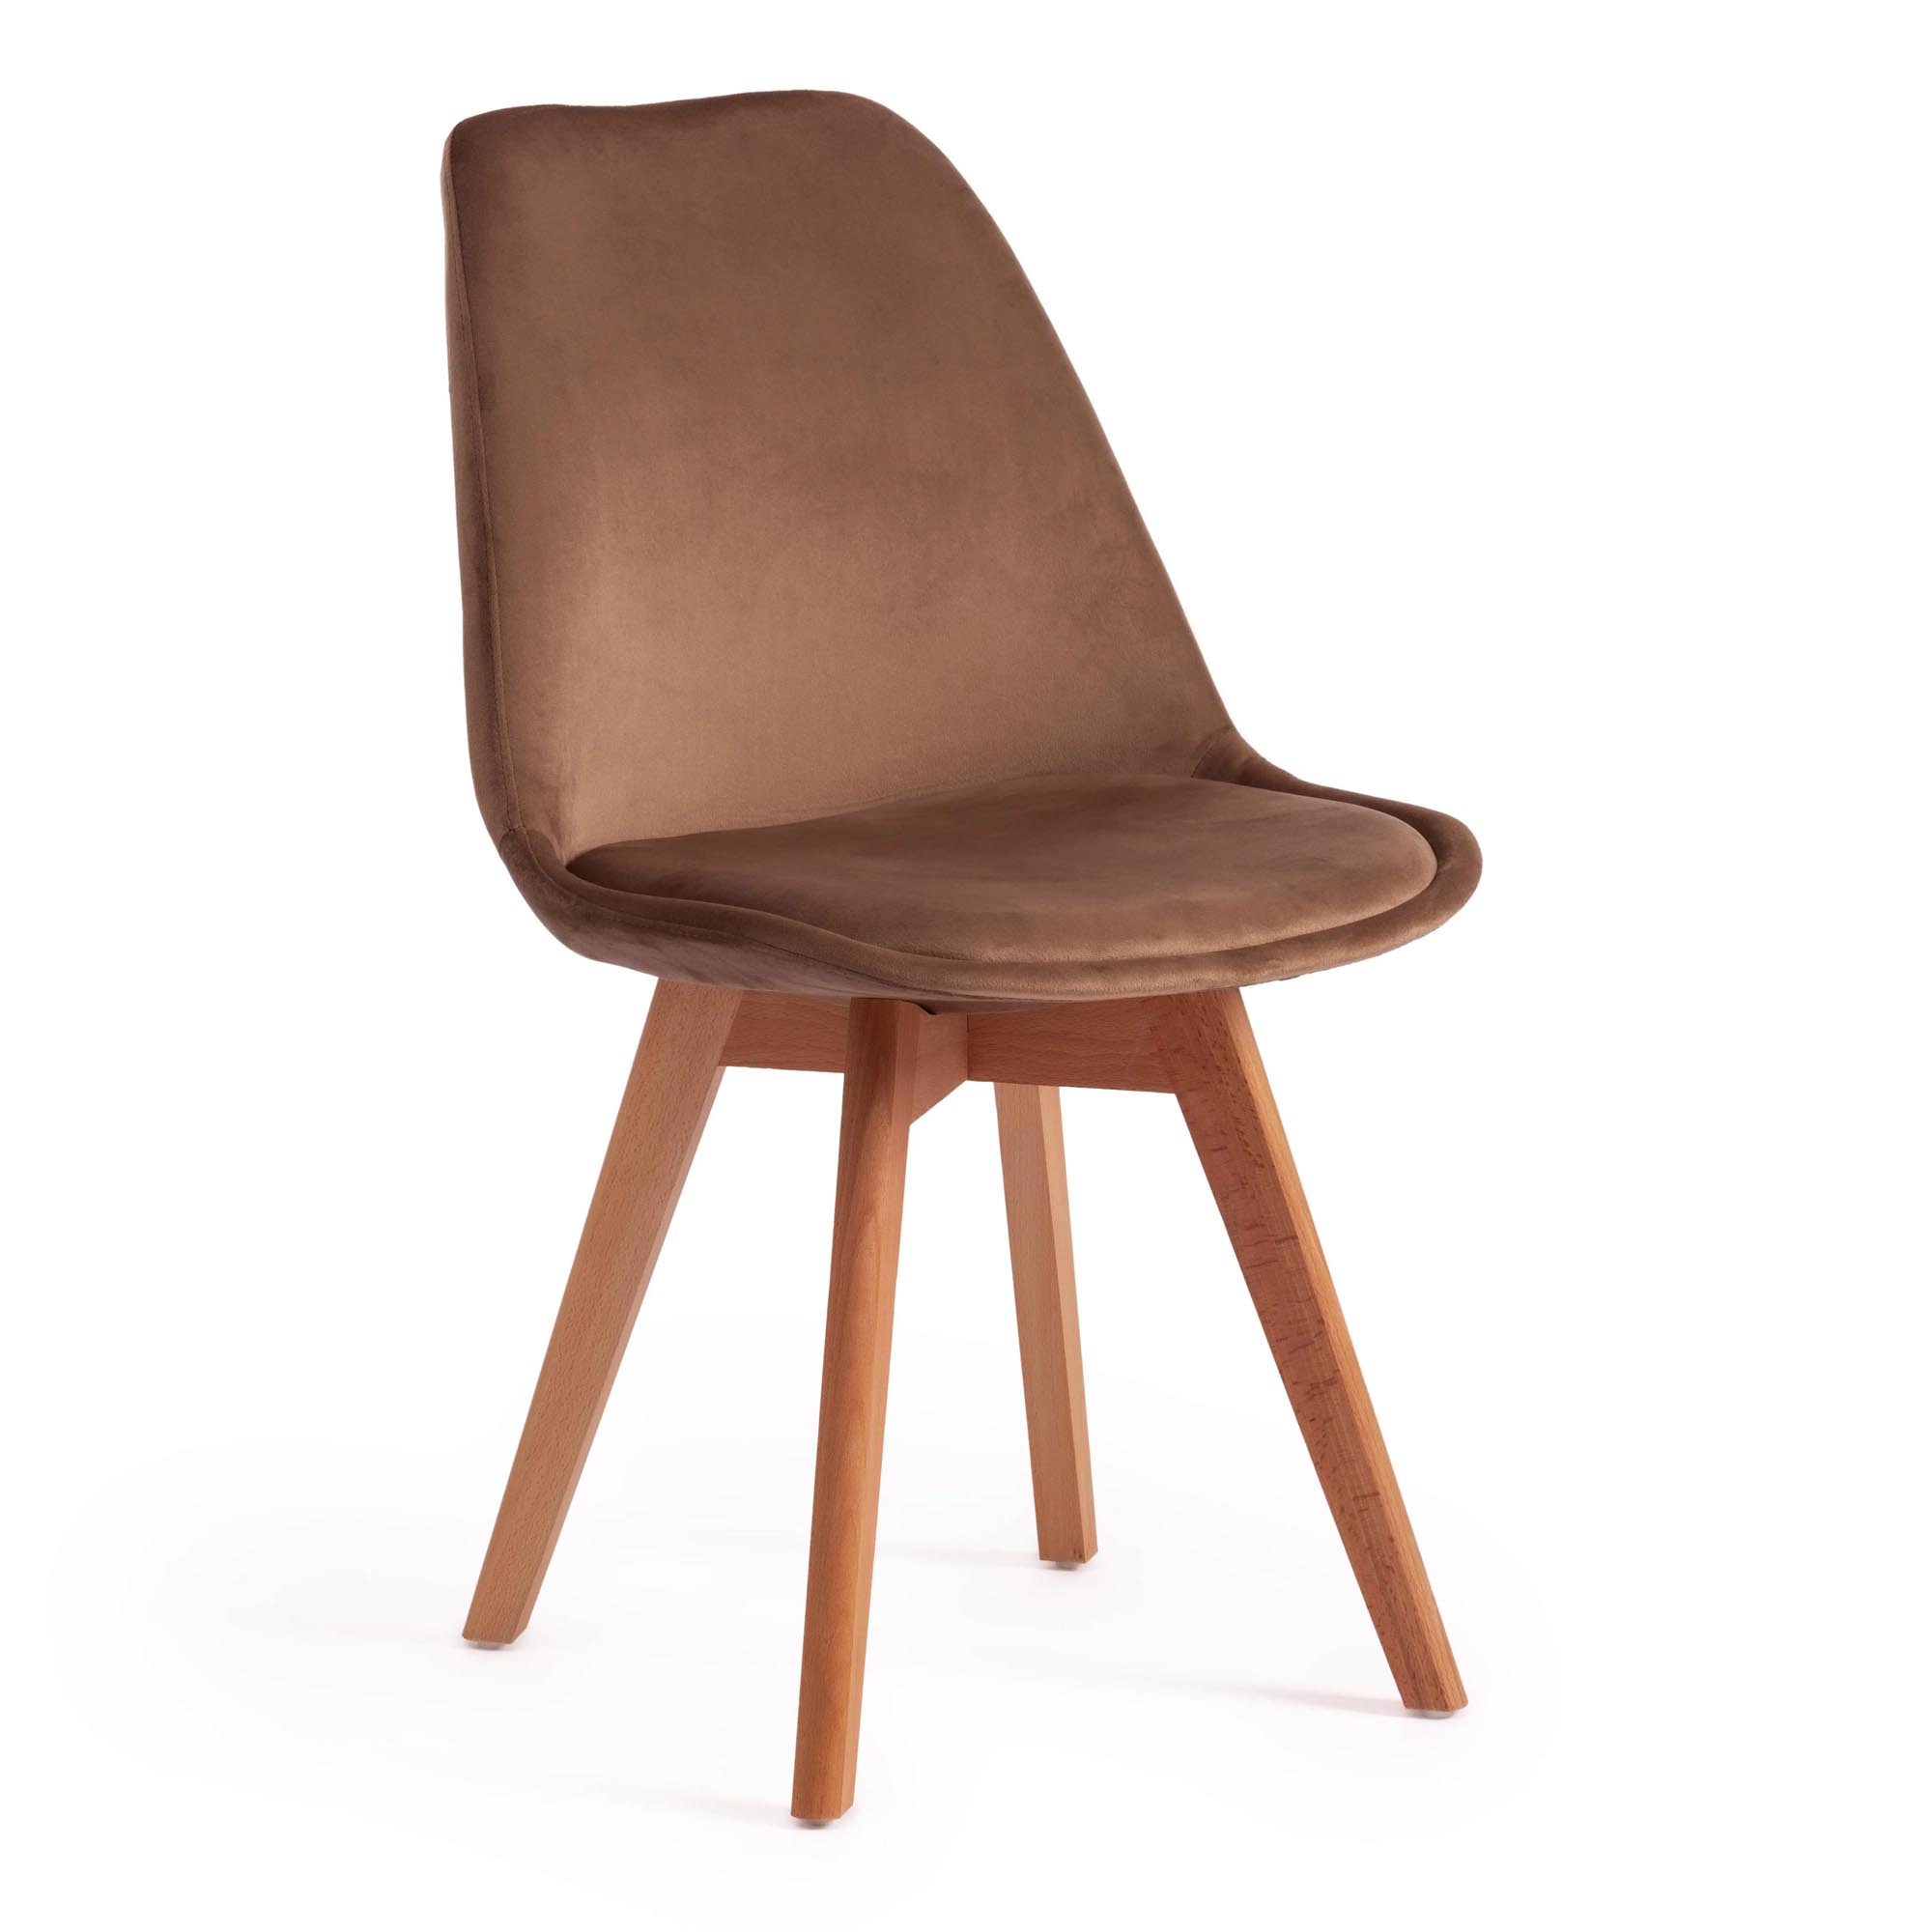 Стул TC Tulip Soft 54x47x83 см коричневый/натуральный стул tc tulip fashion chair 55x48x81 см белый